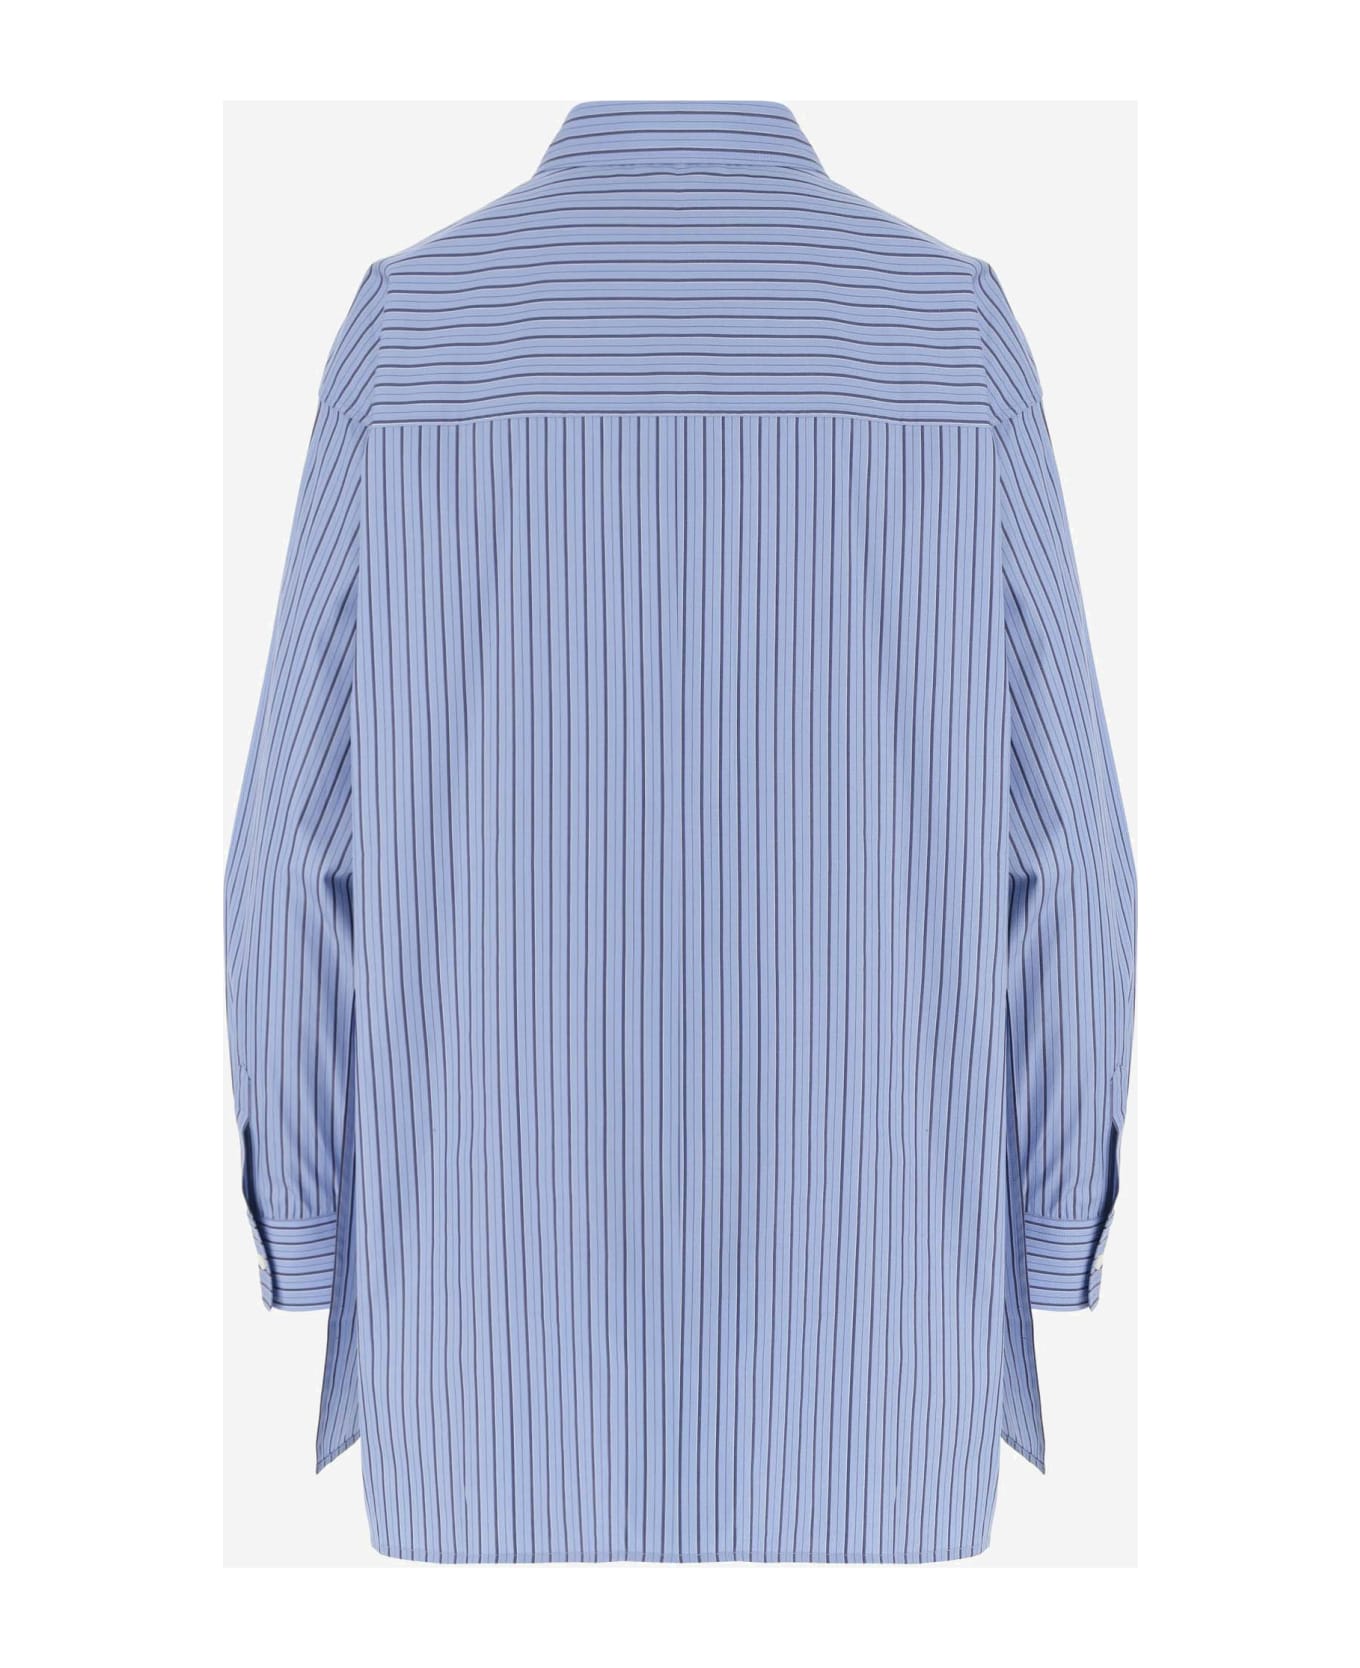 Aspesi Cotton Shirt With Striped Pattern - Blue